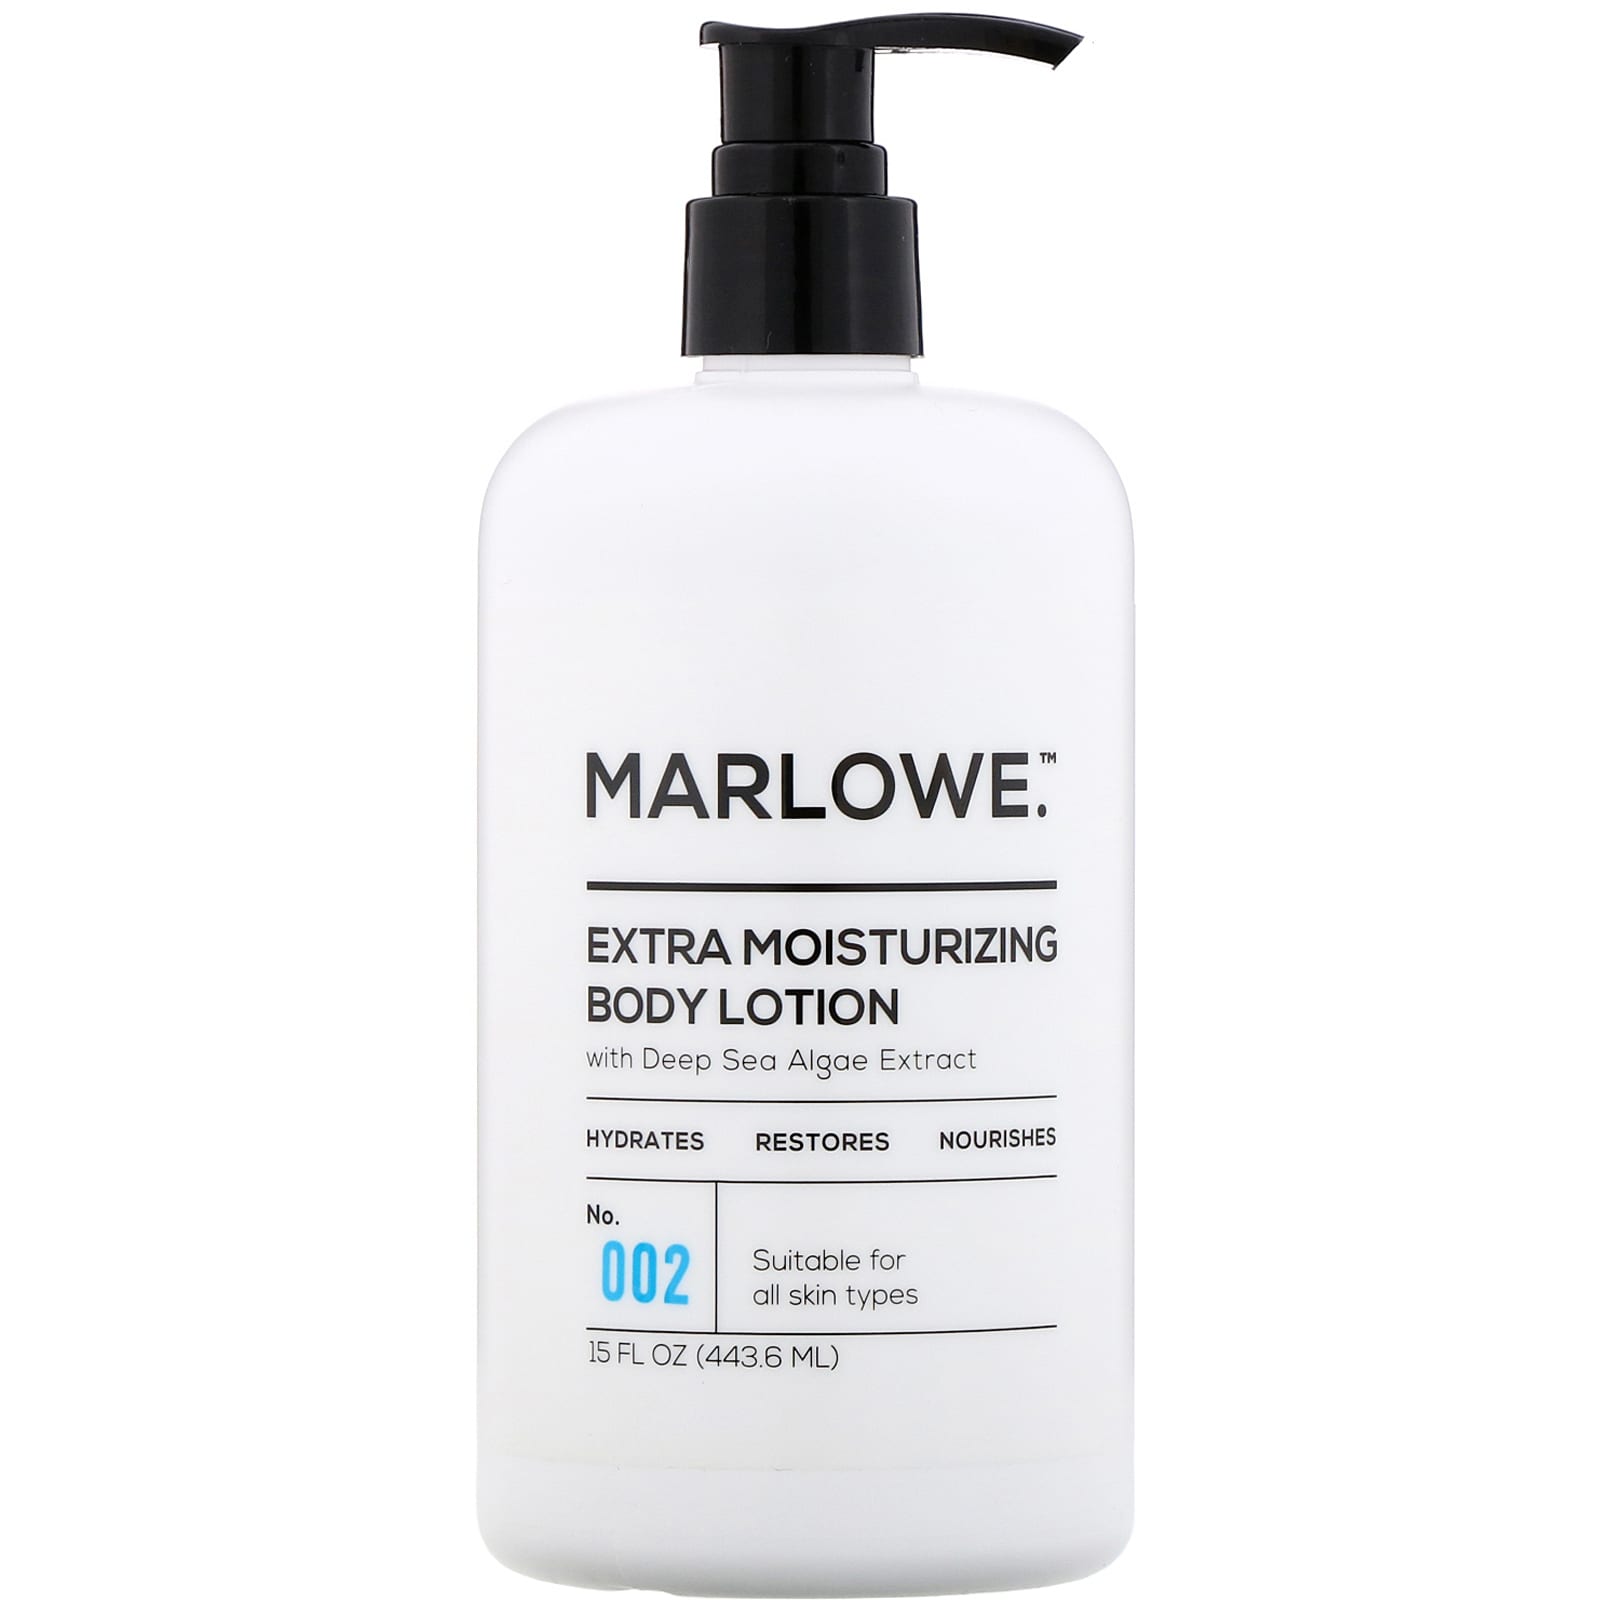 Marlowe, Extra Moisturizing Body Lotion, No. 002 (443.6 ml)